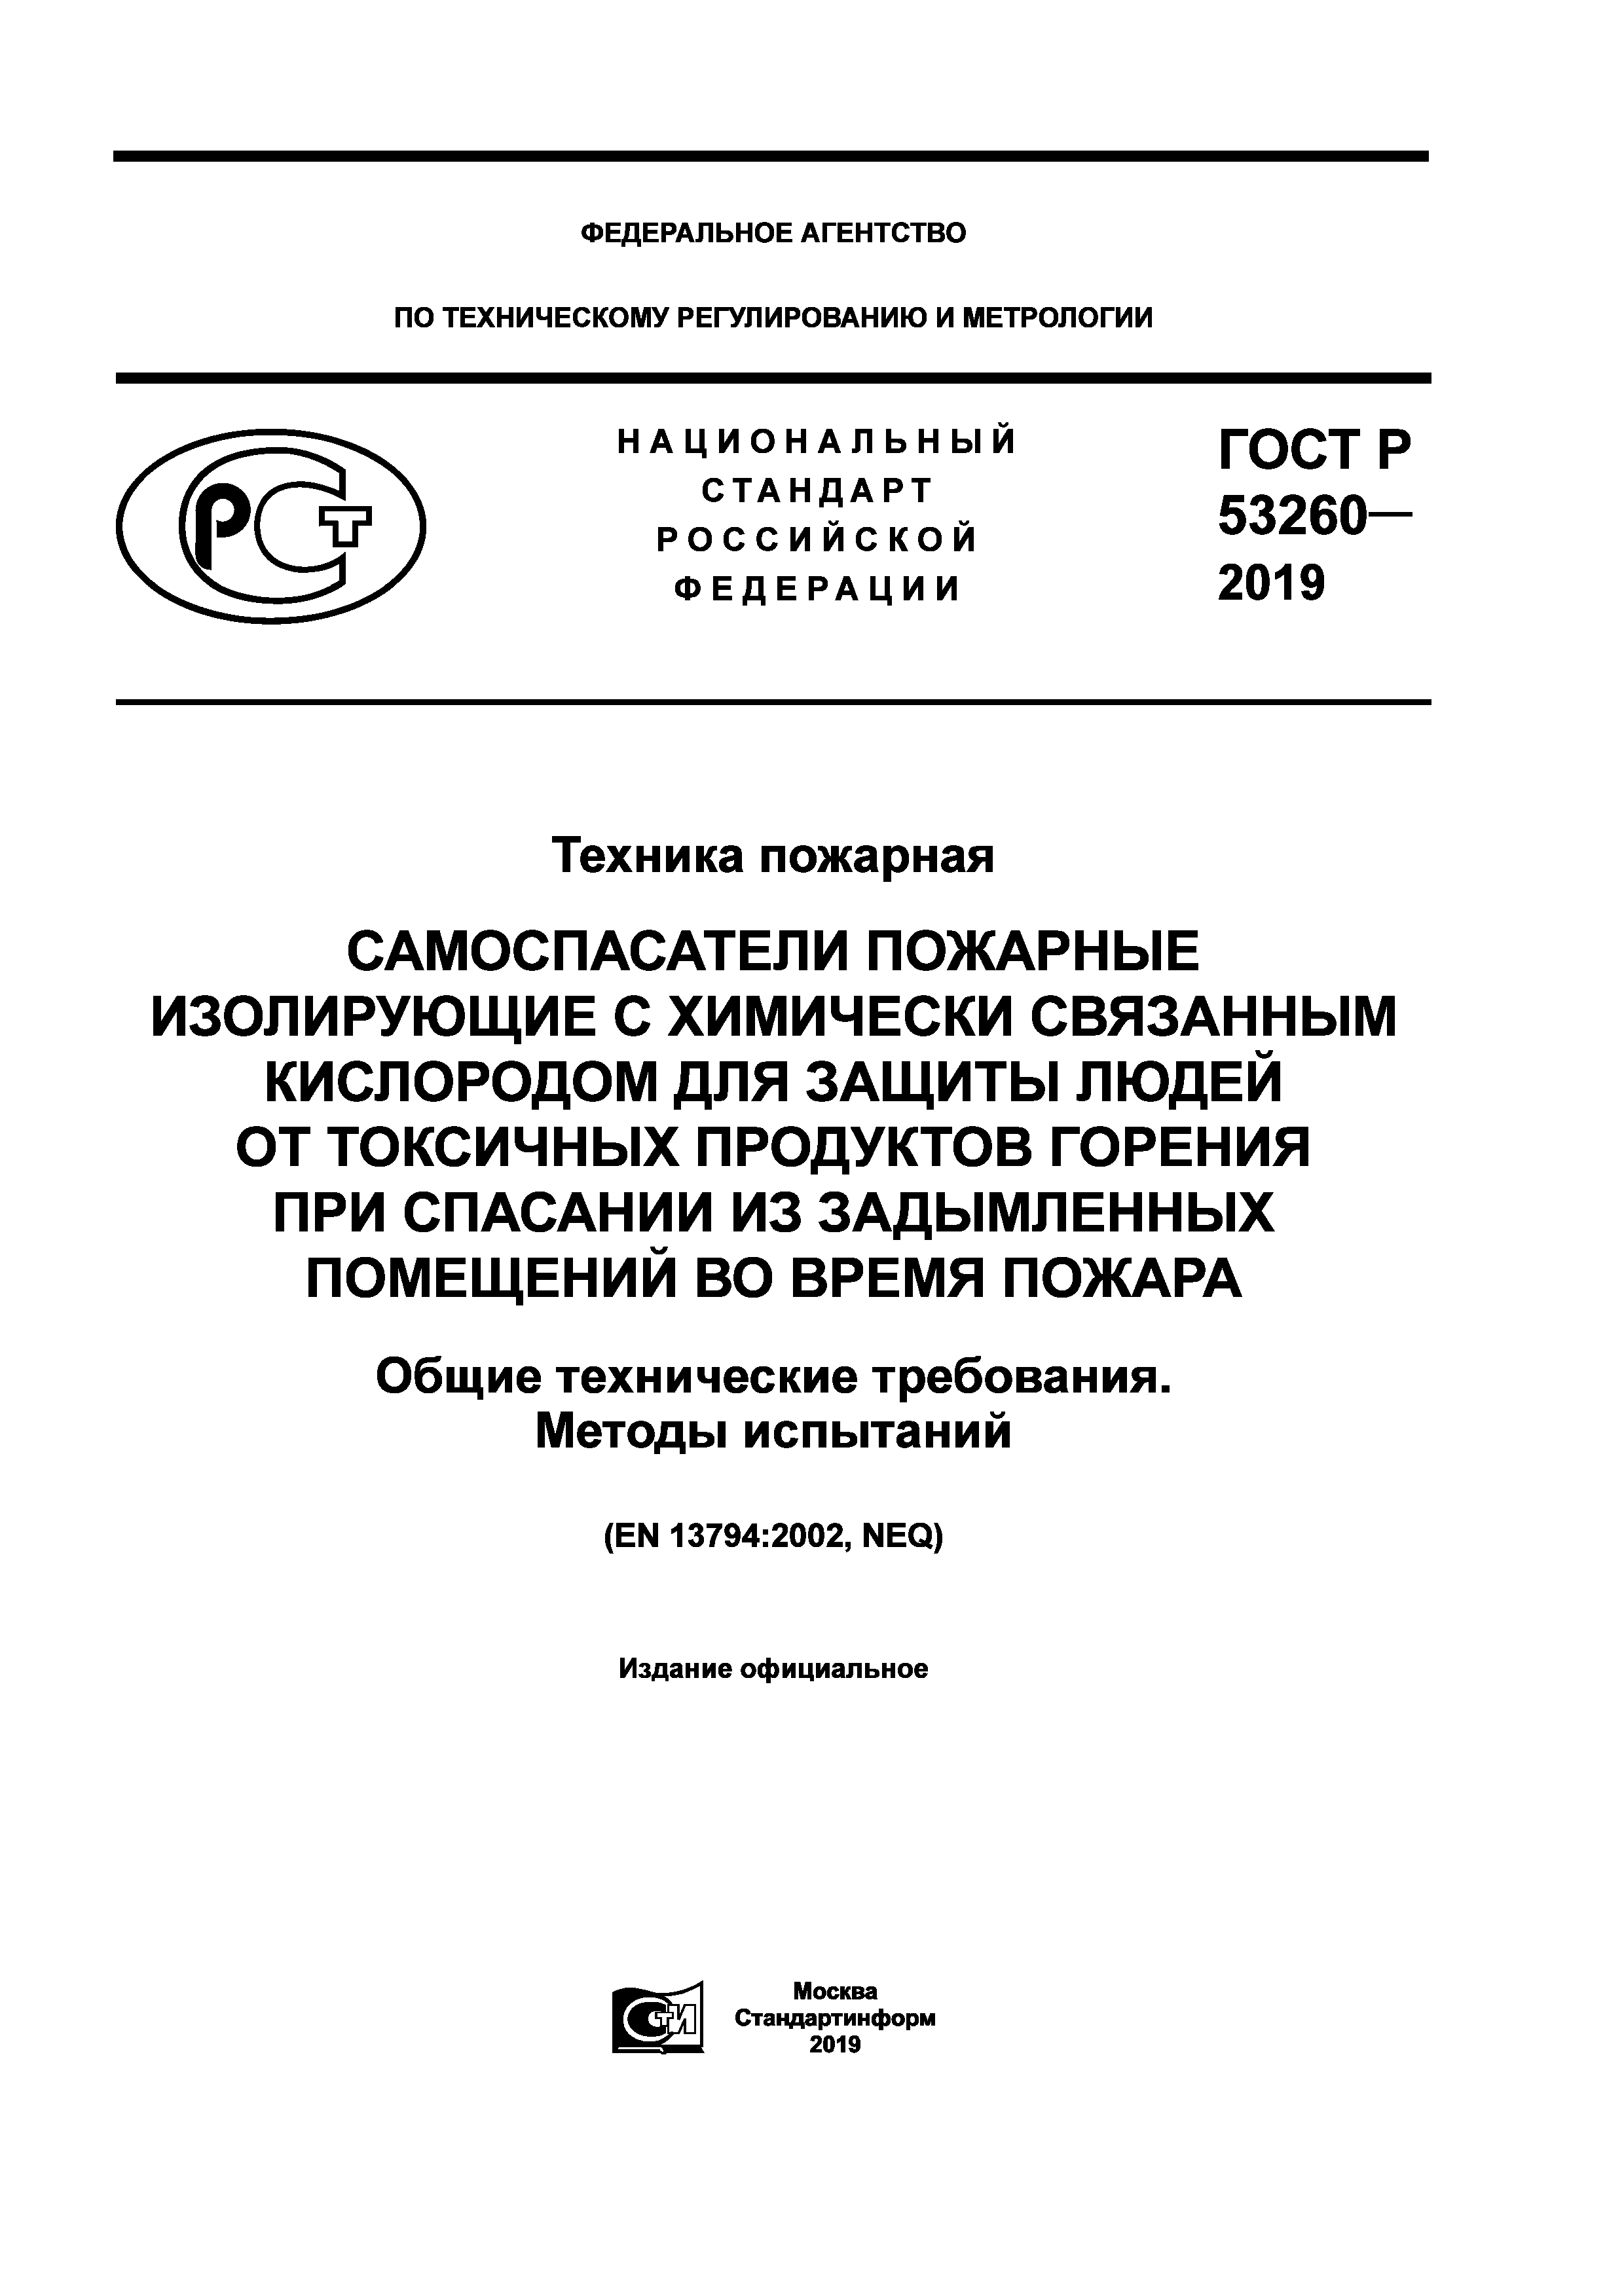 ГОСТ Р 53260-2019